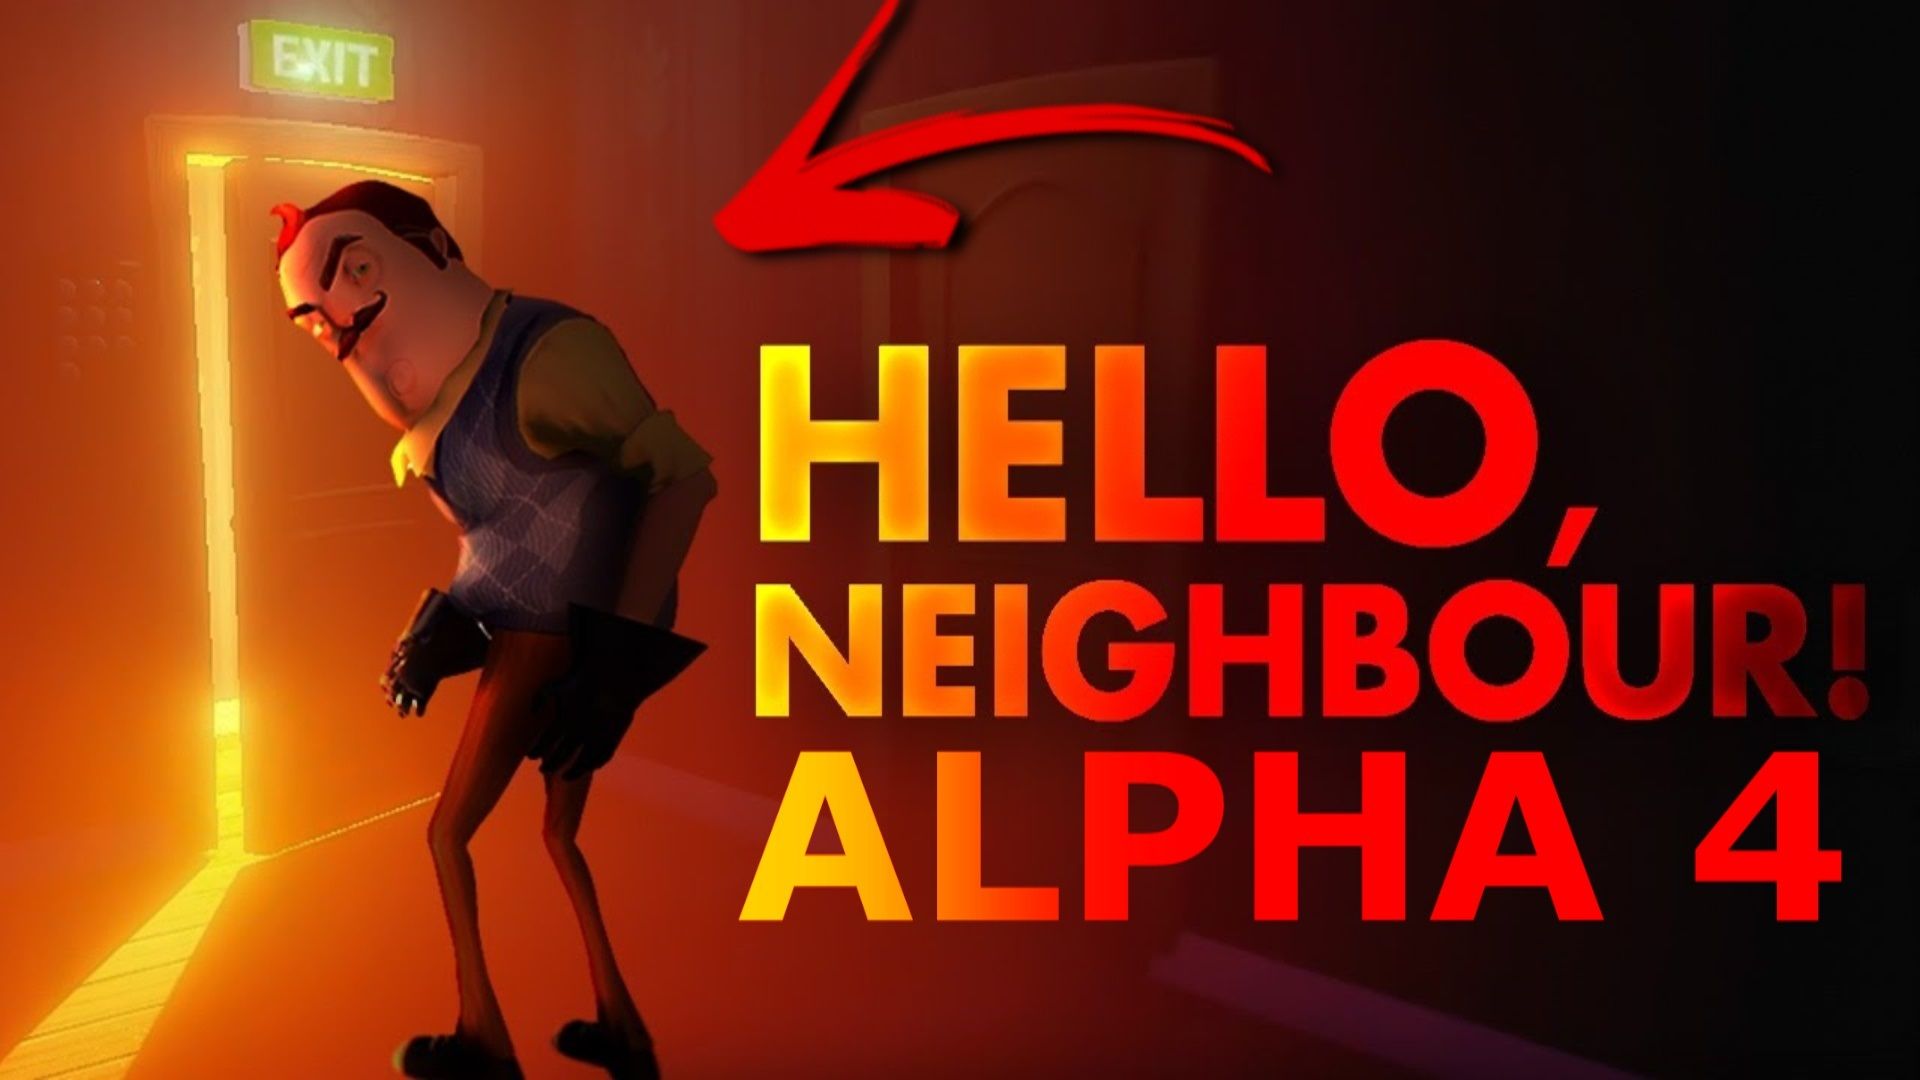 gamejolt hello neighbor alpha 2